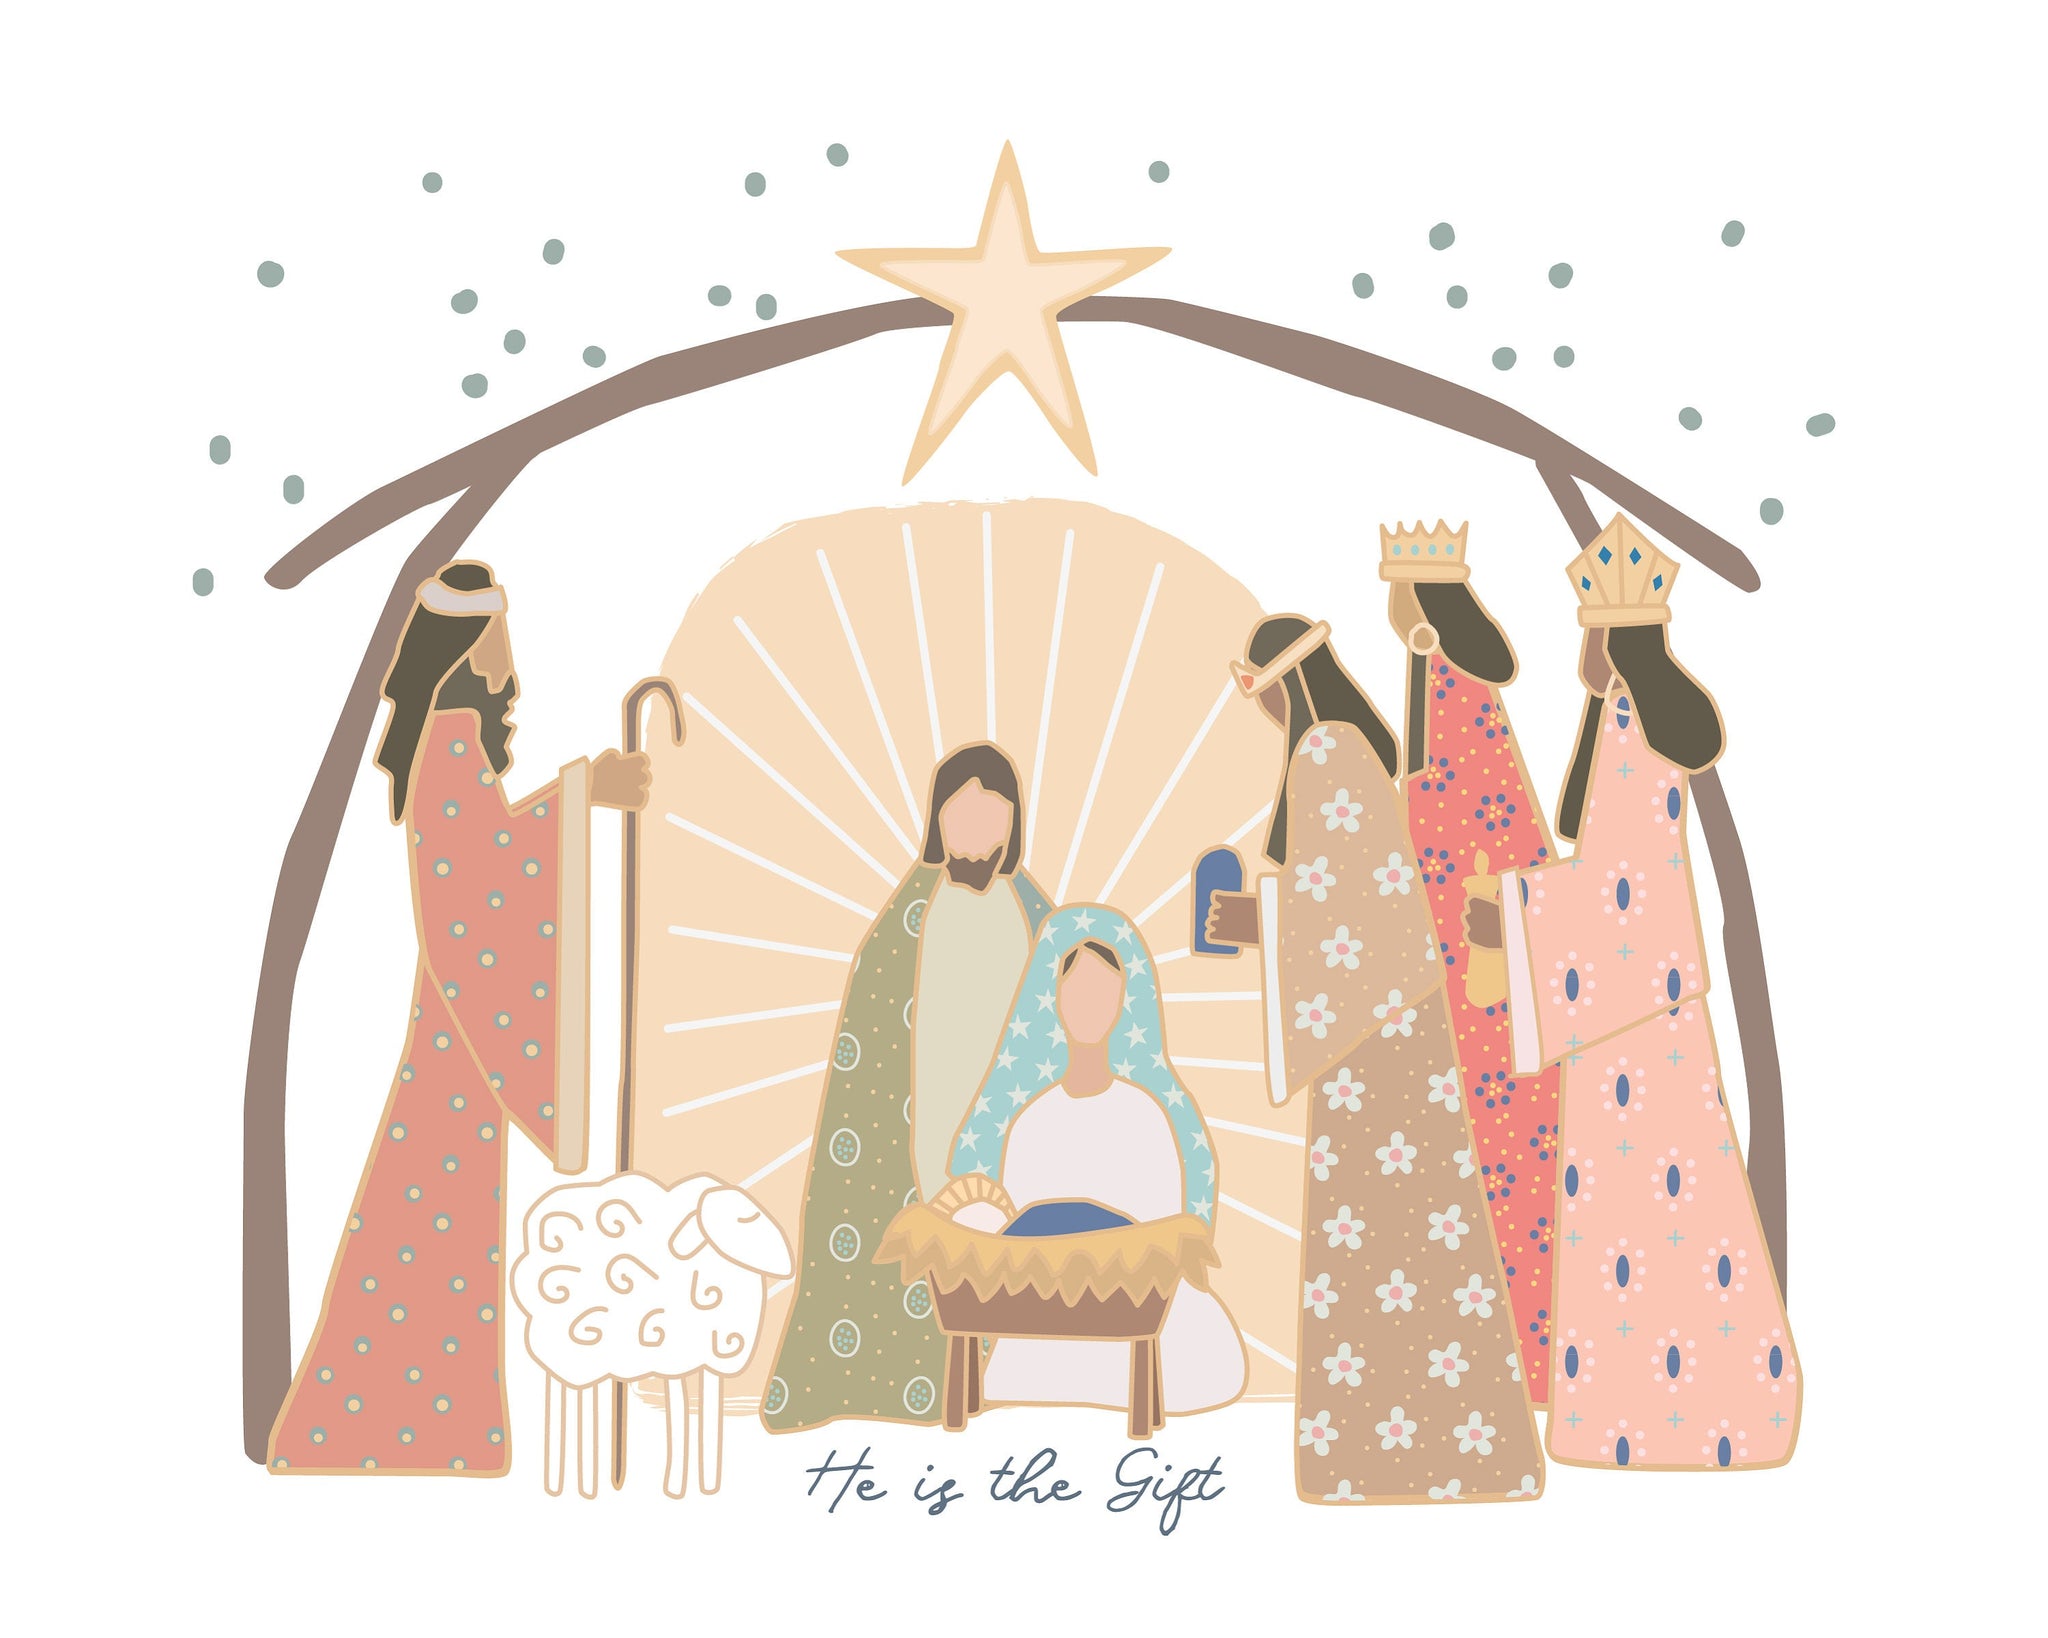 nativity scene clip art